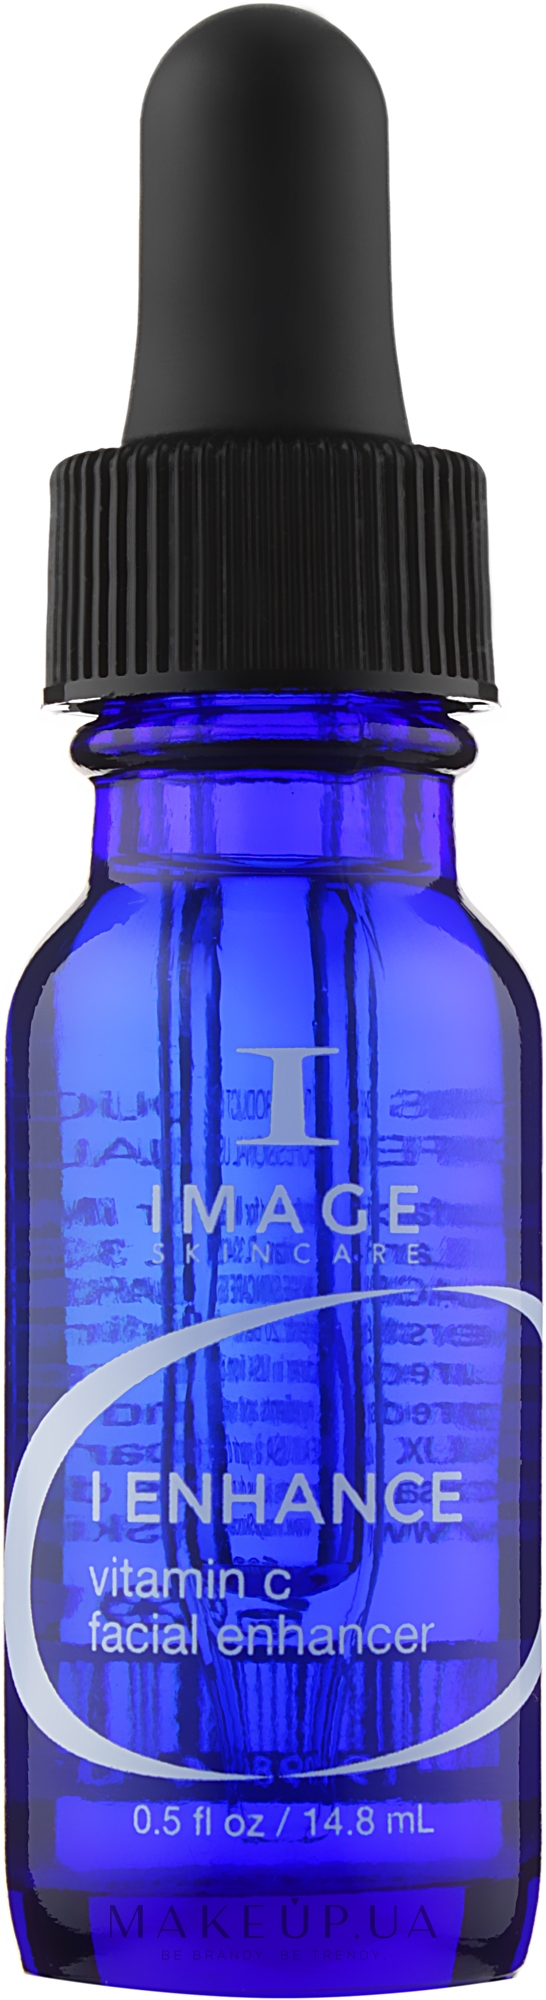 Концентрат для лица "Витамин С" - Image Skincare I Enhance 25% Vitamin C Facial Enhancer  — фото 14.8ml